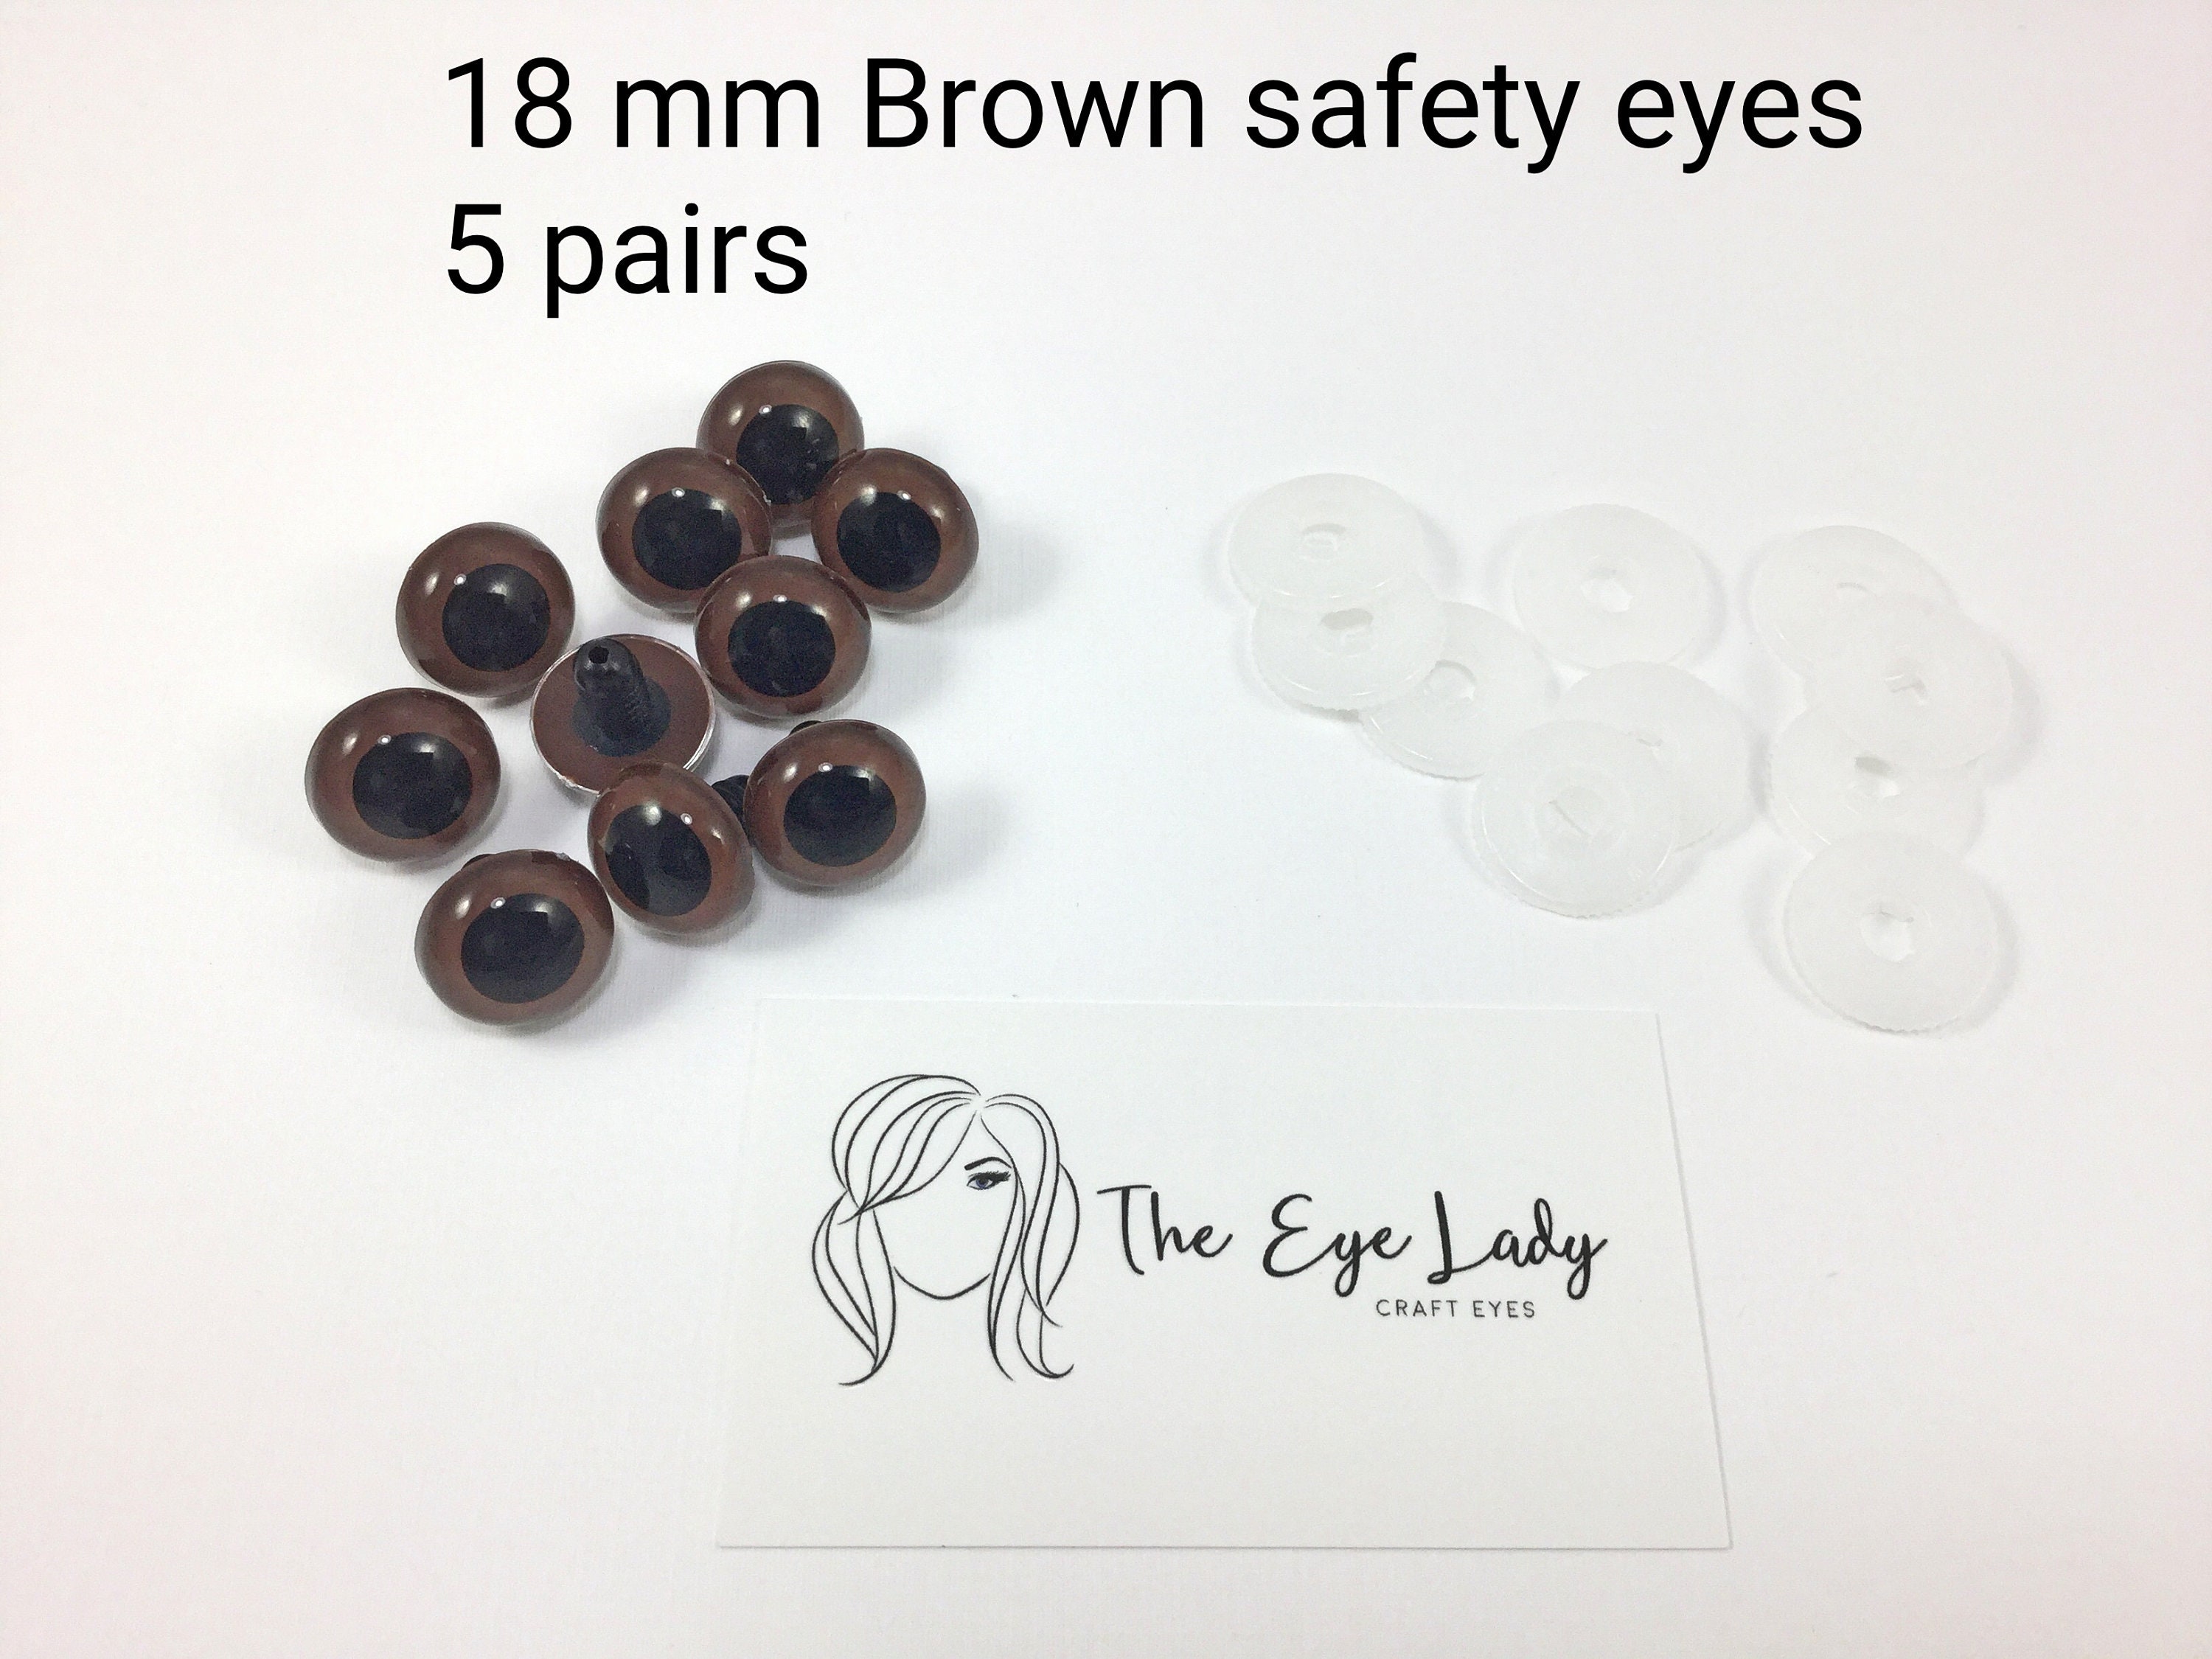 Safety Eyes With Eyelashes 15 Mm Brown Safety Eyes Translucent